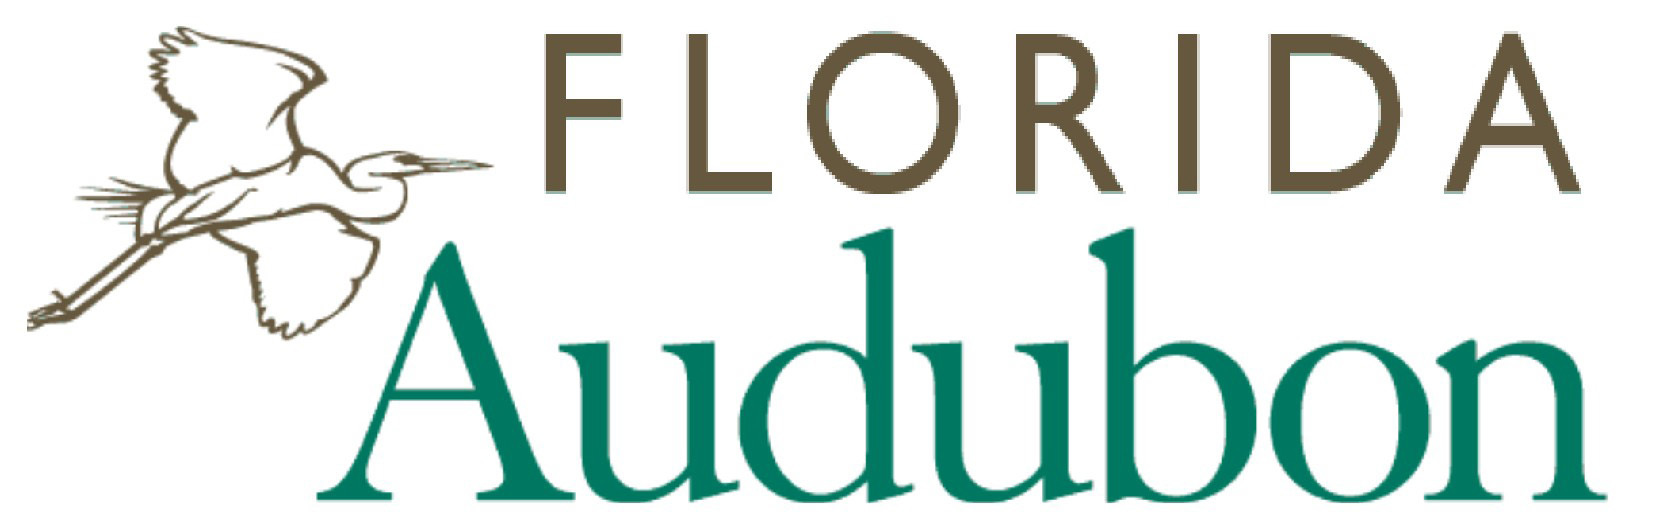 Florida Audubon